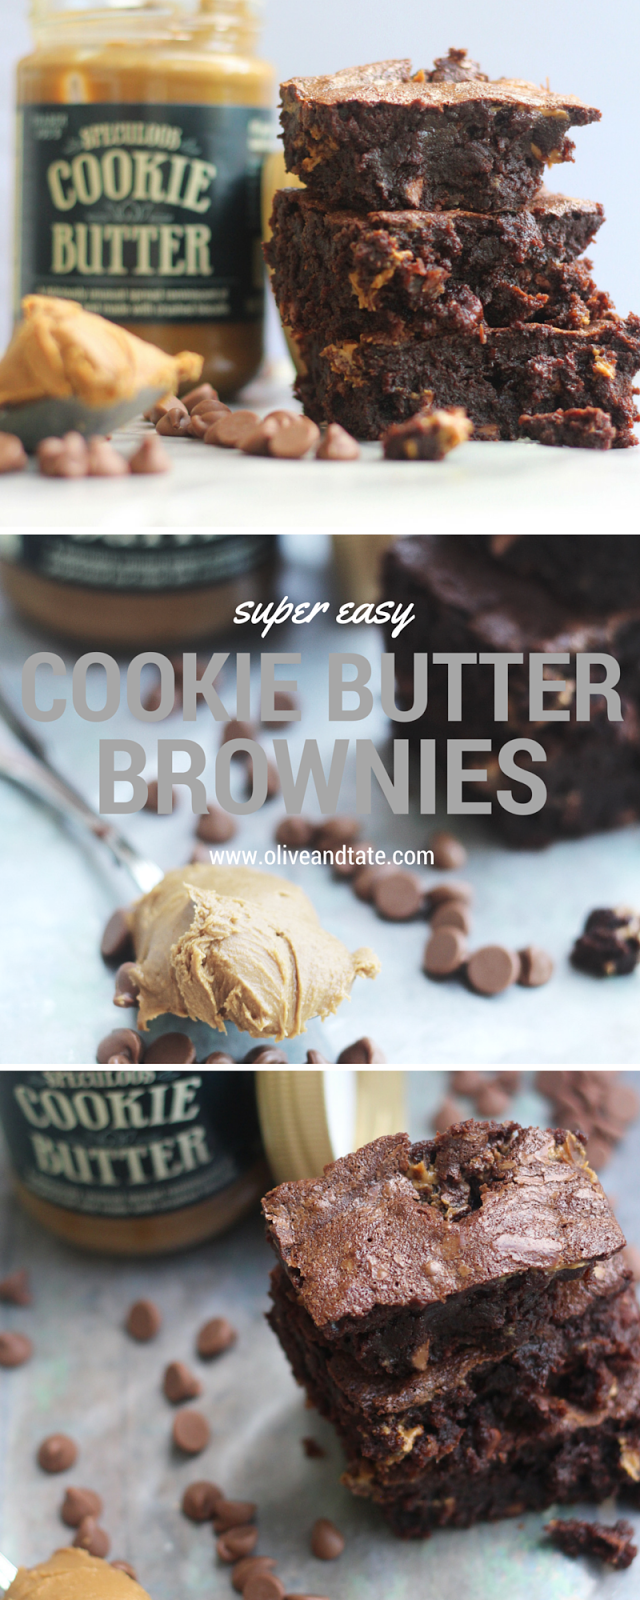 Cookie Butter Brownies